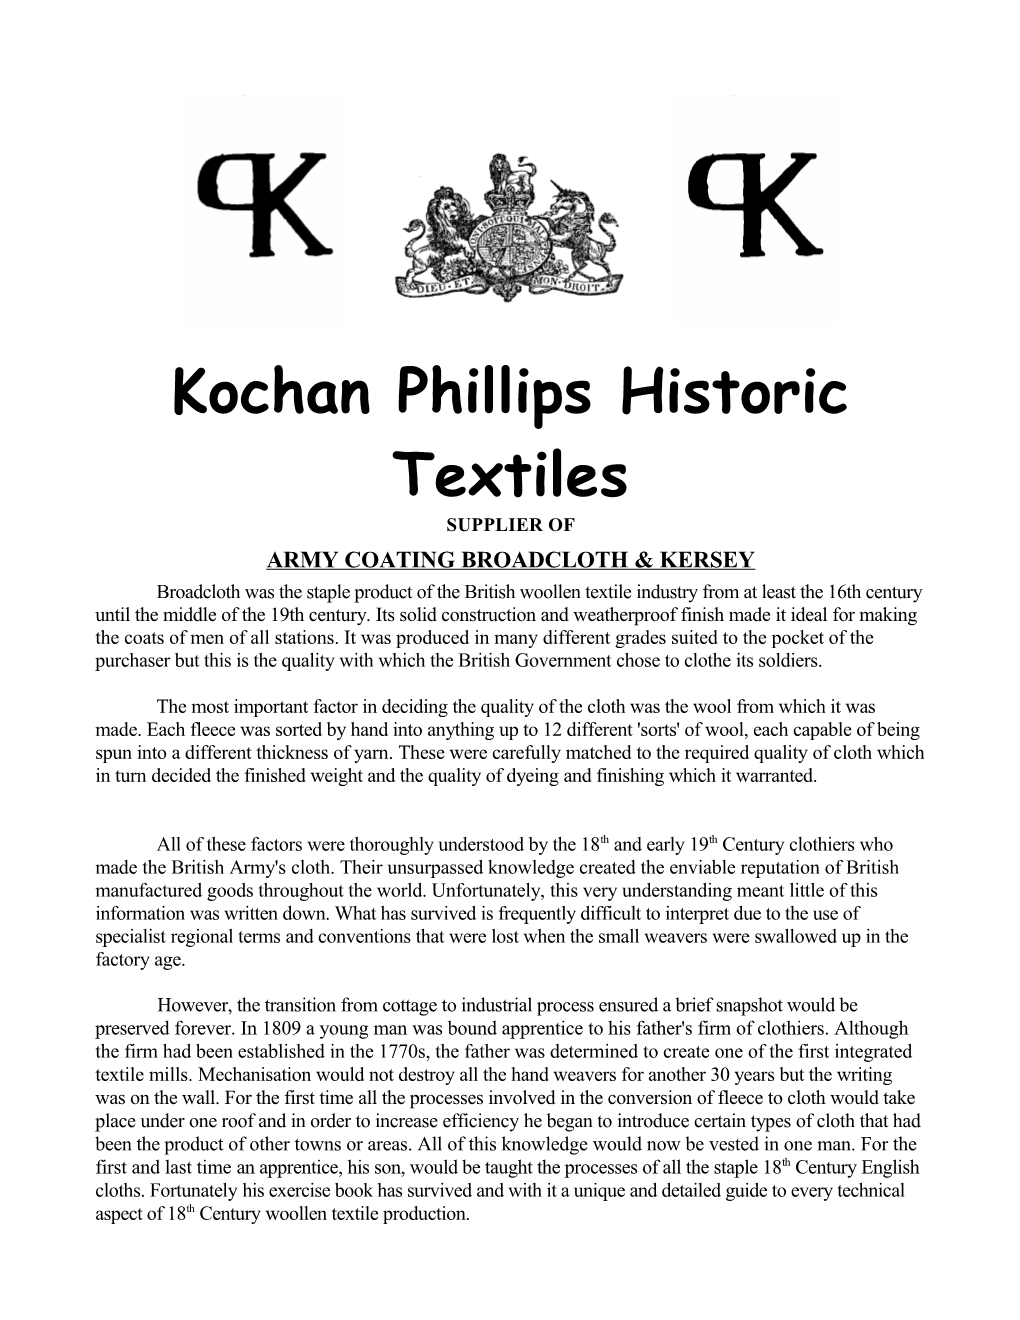 Kochan Phillips Historic Textiles